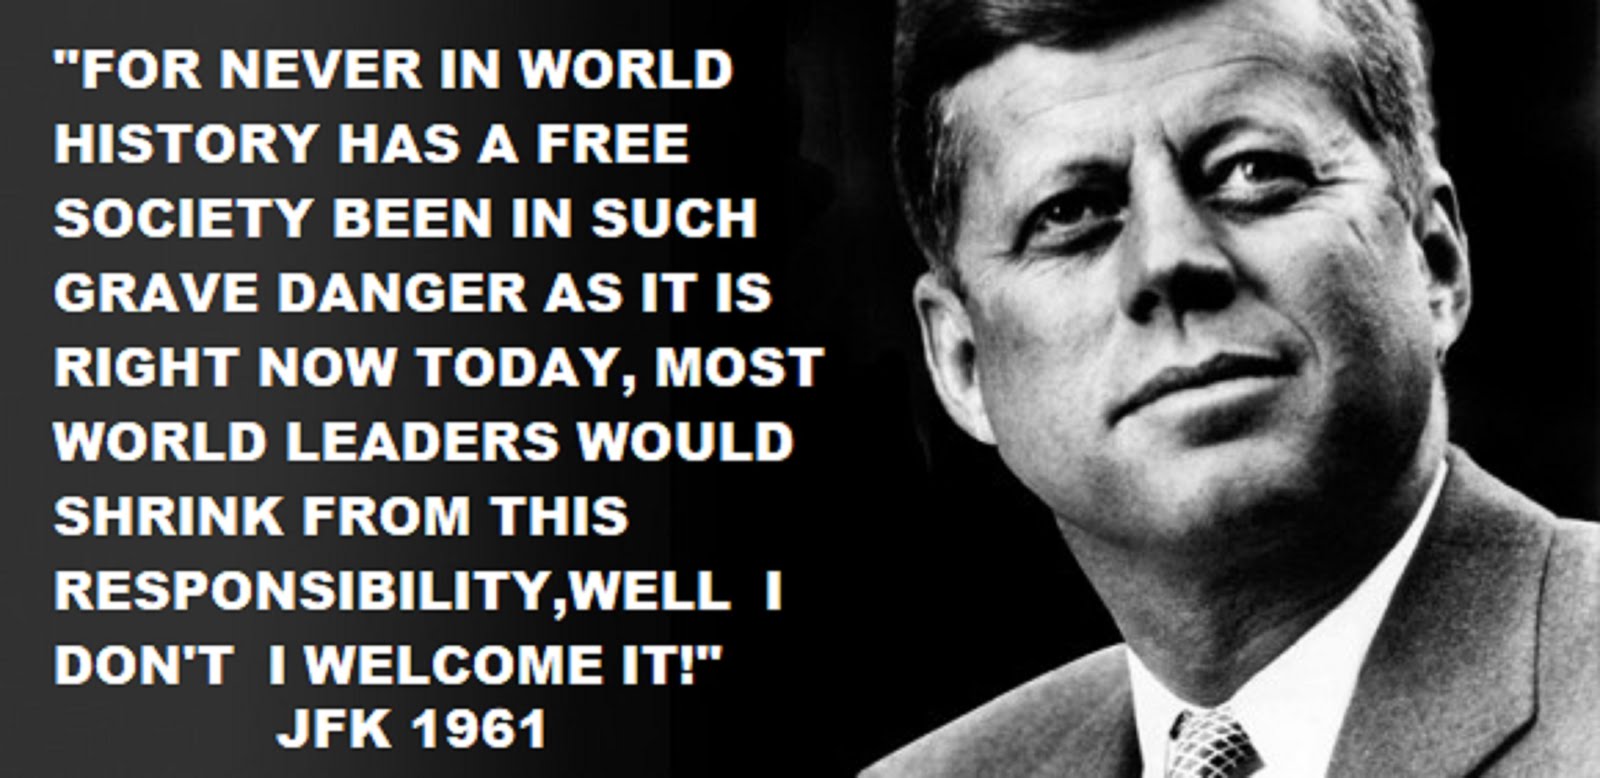 JFK'S INAUGURAL ADDRESS 1961